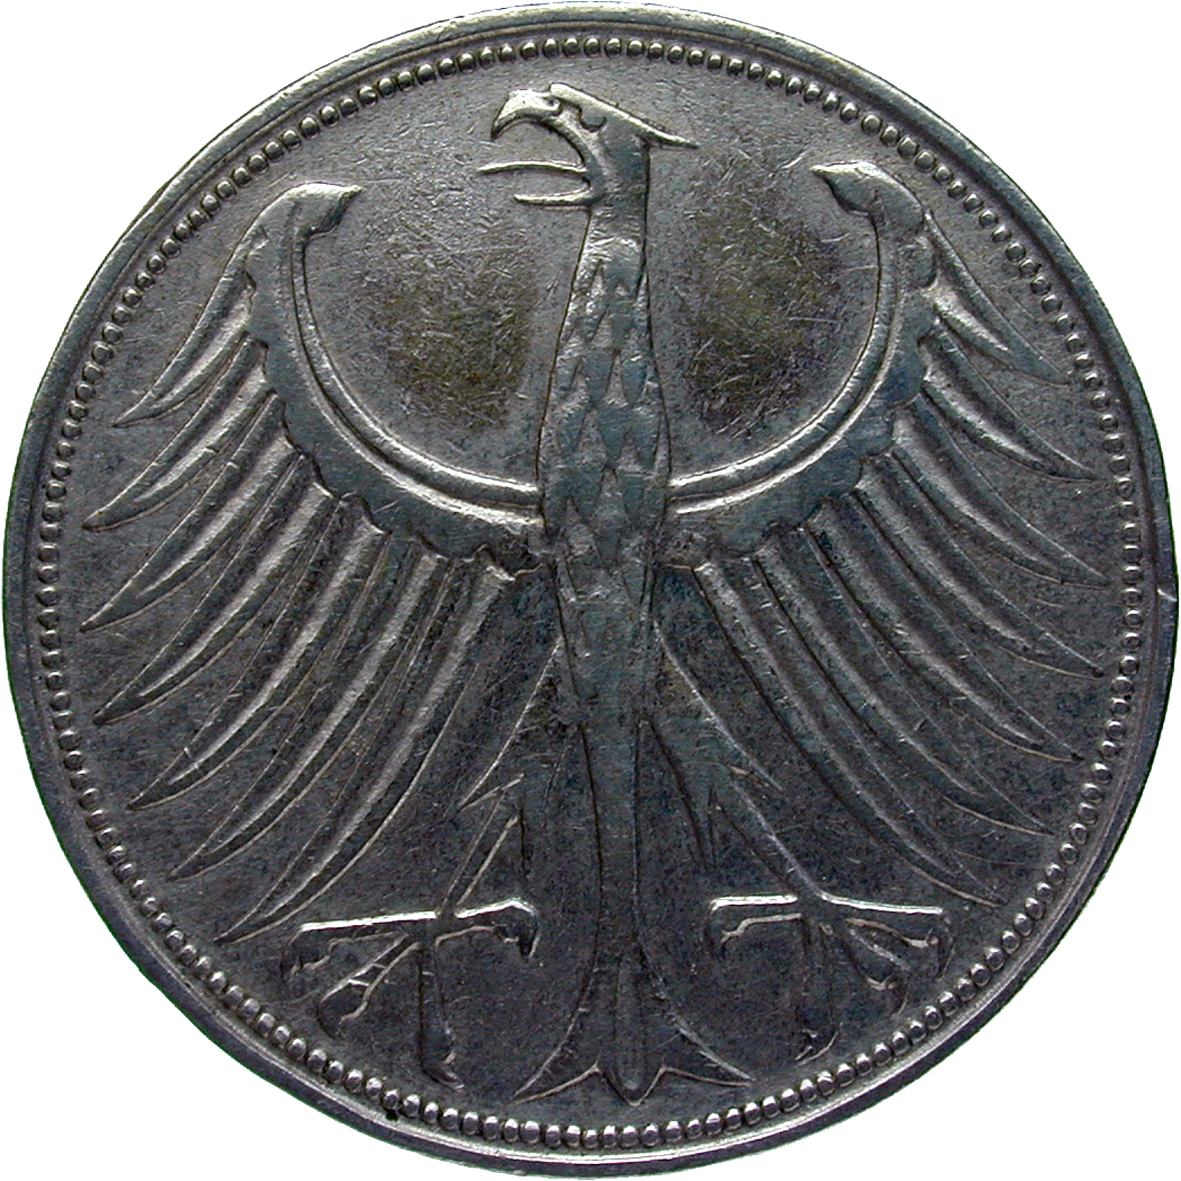 Federal Republic of Germany, 5 Deutsche Mark 1951 (reverse)